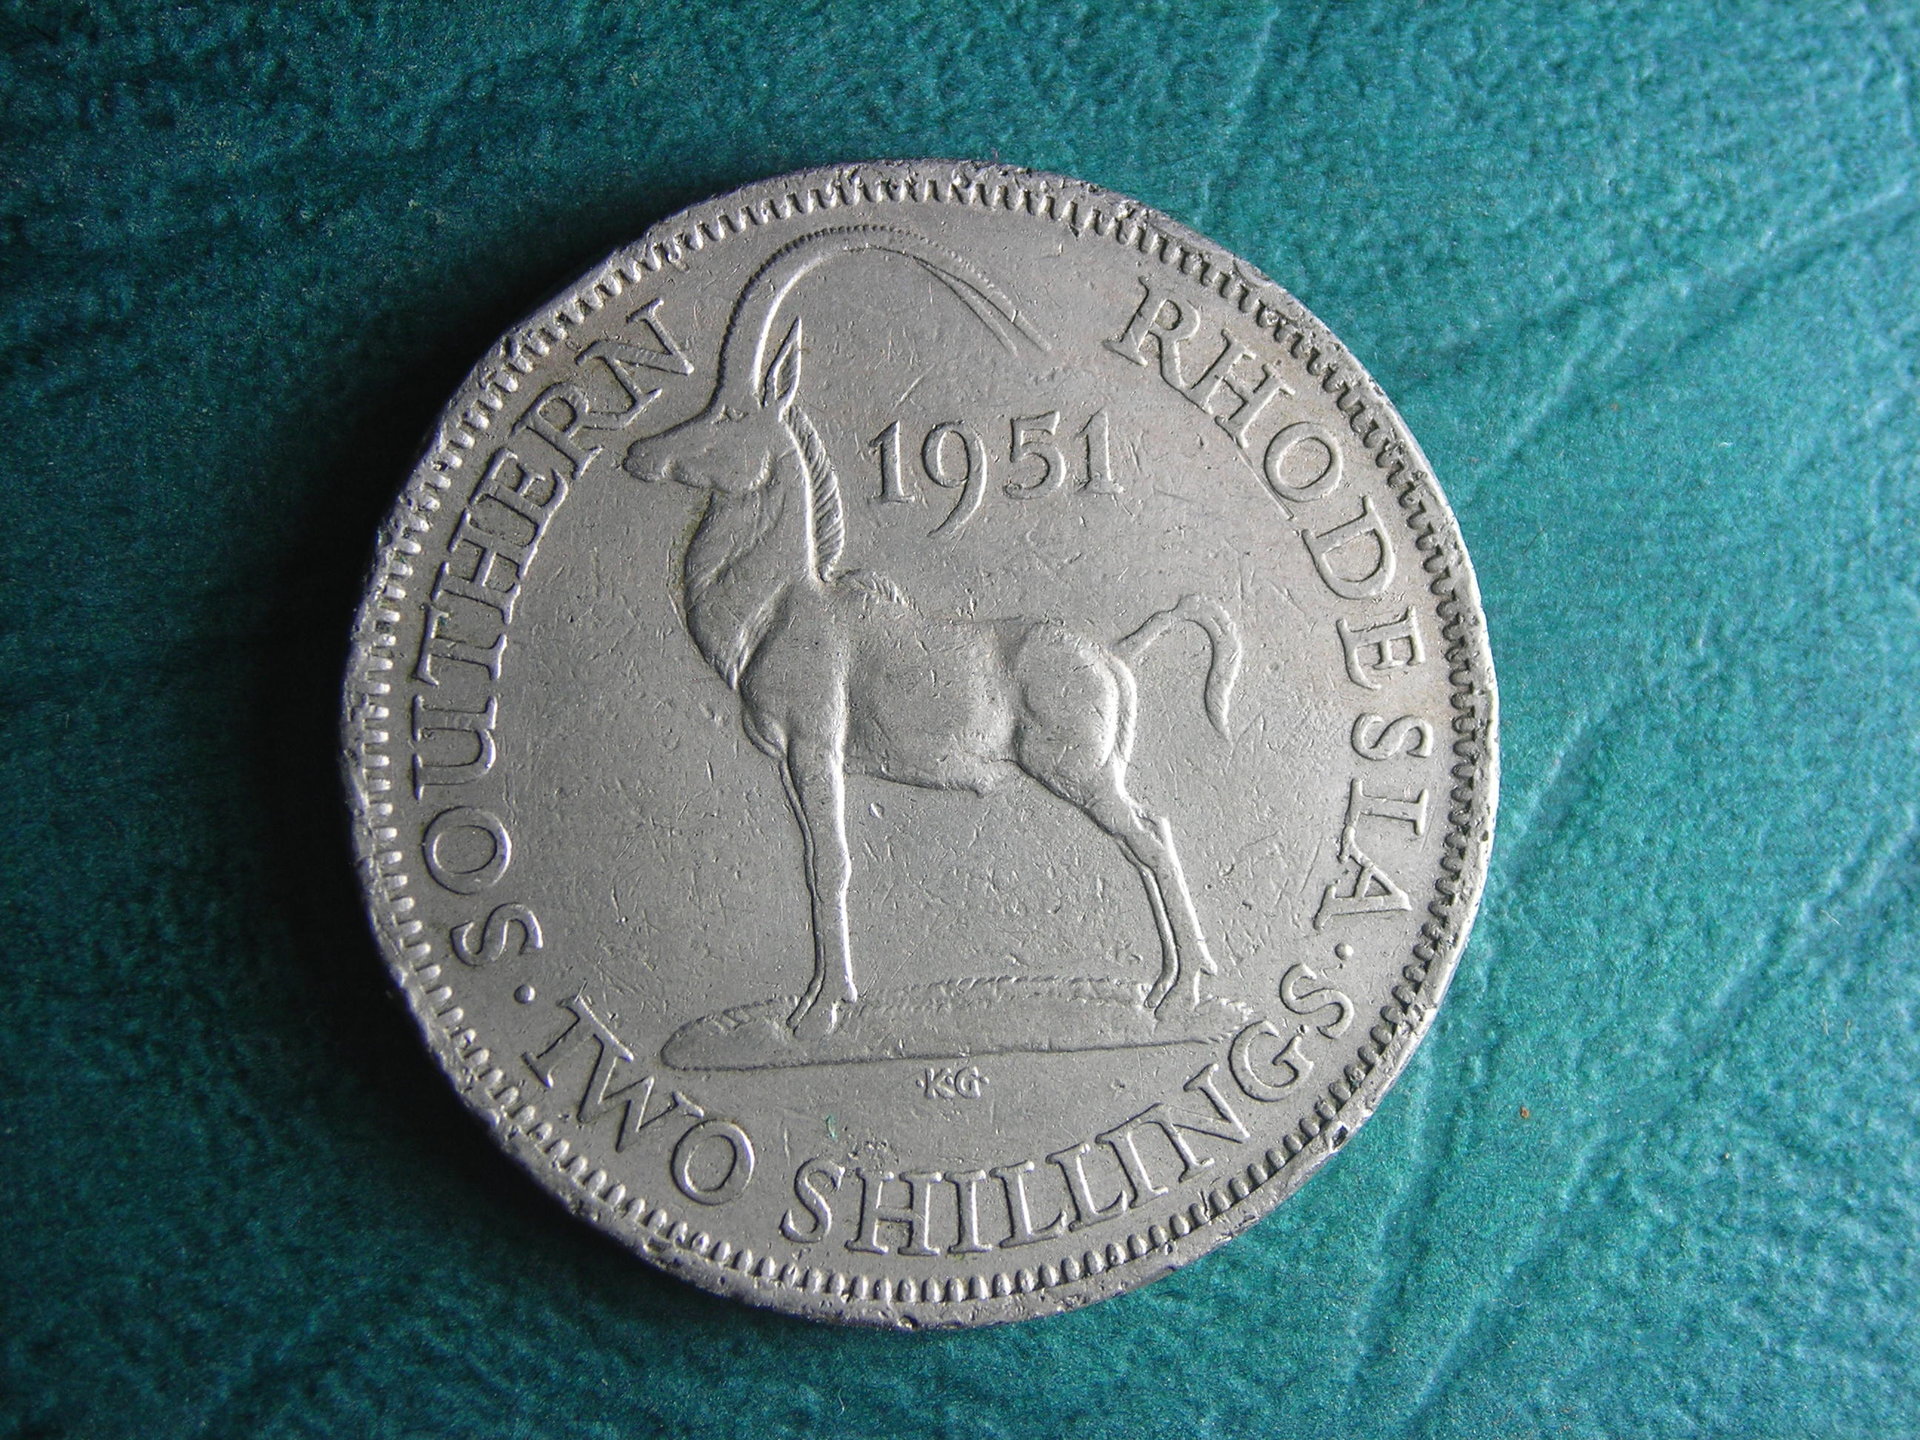 1951 S Rhodesia 2 shilling rev.JPG